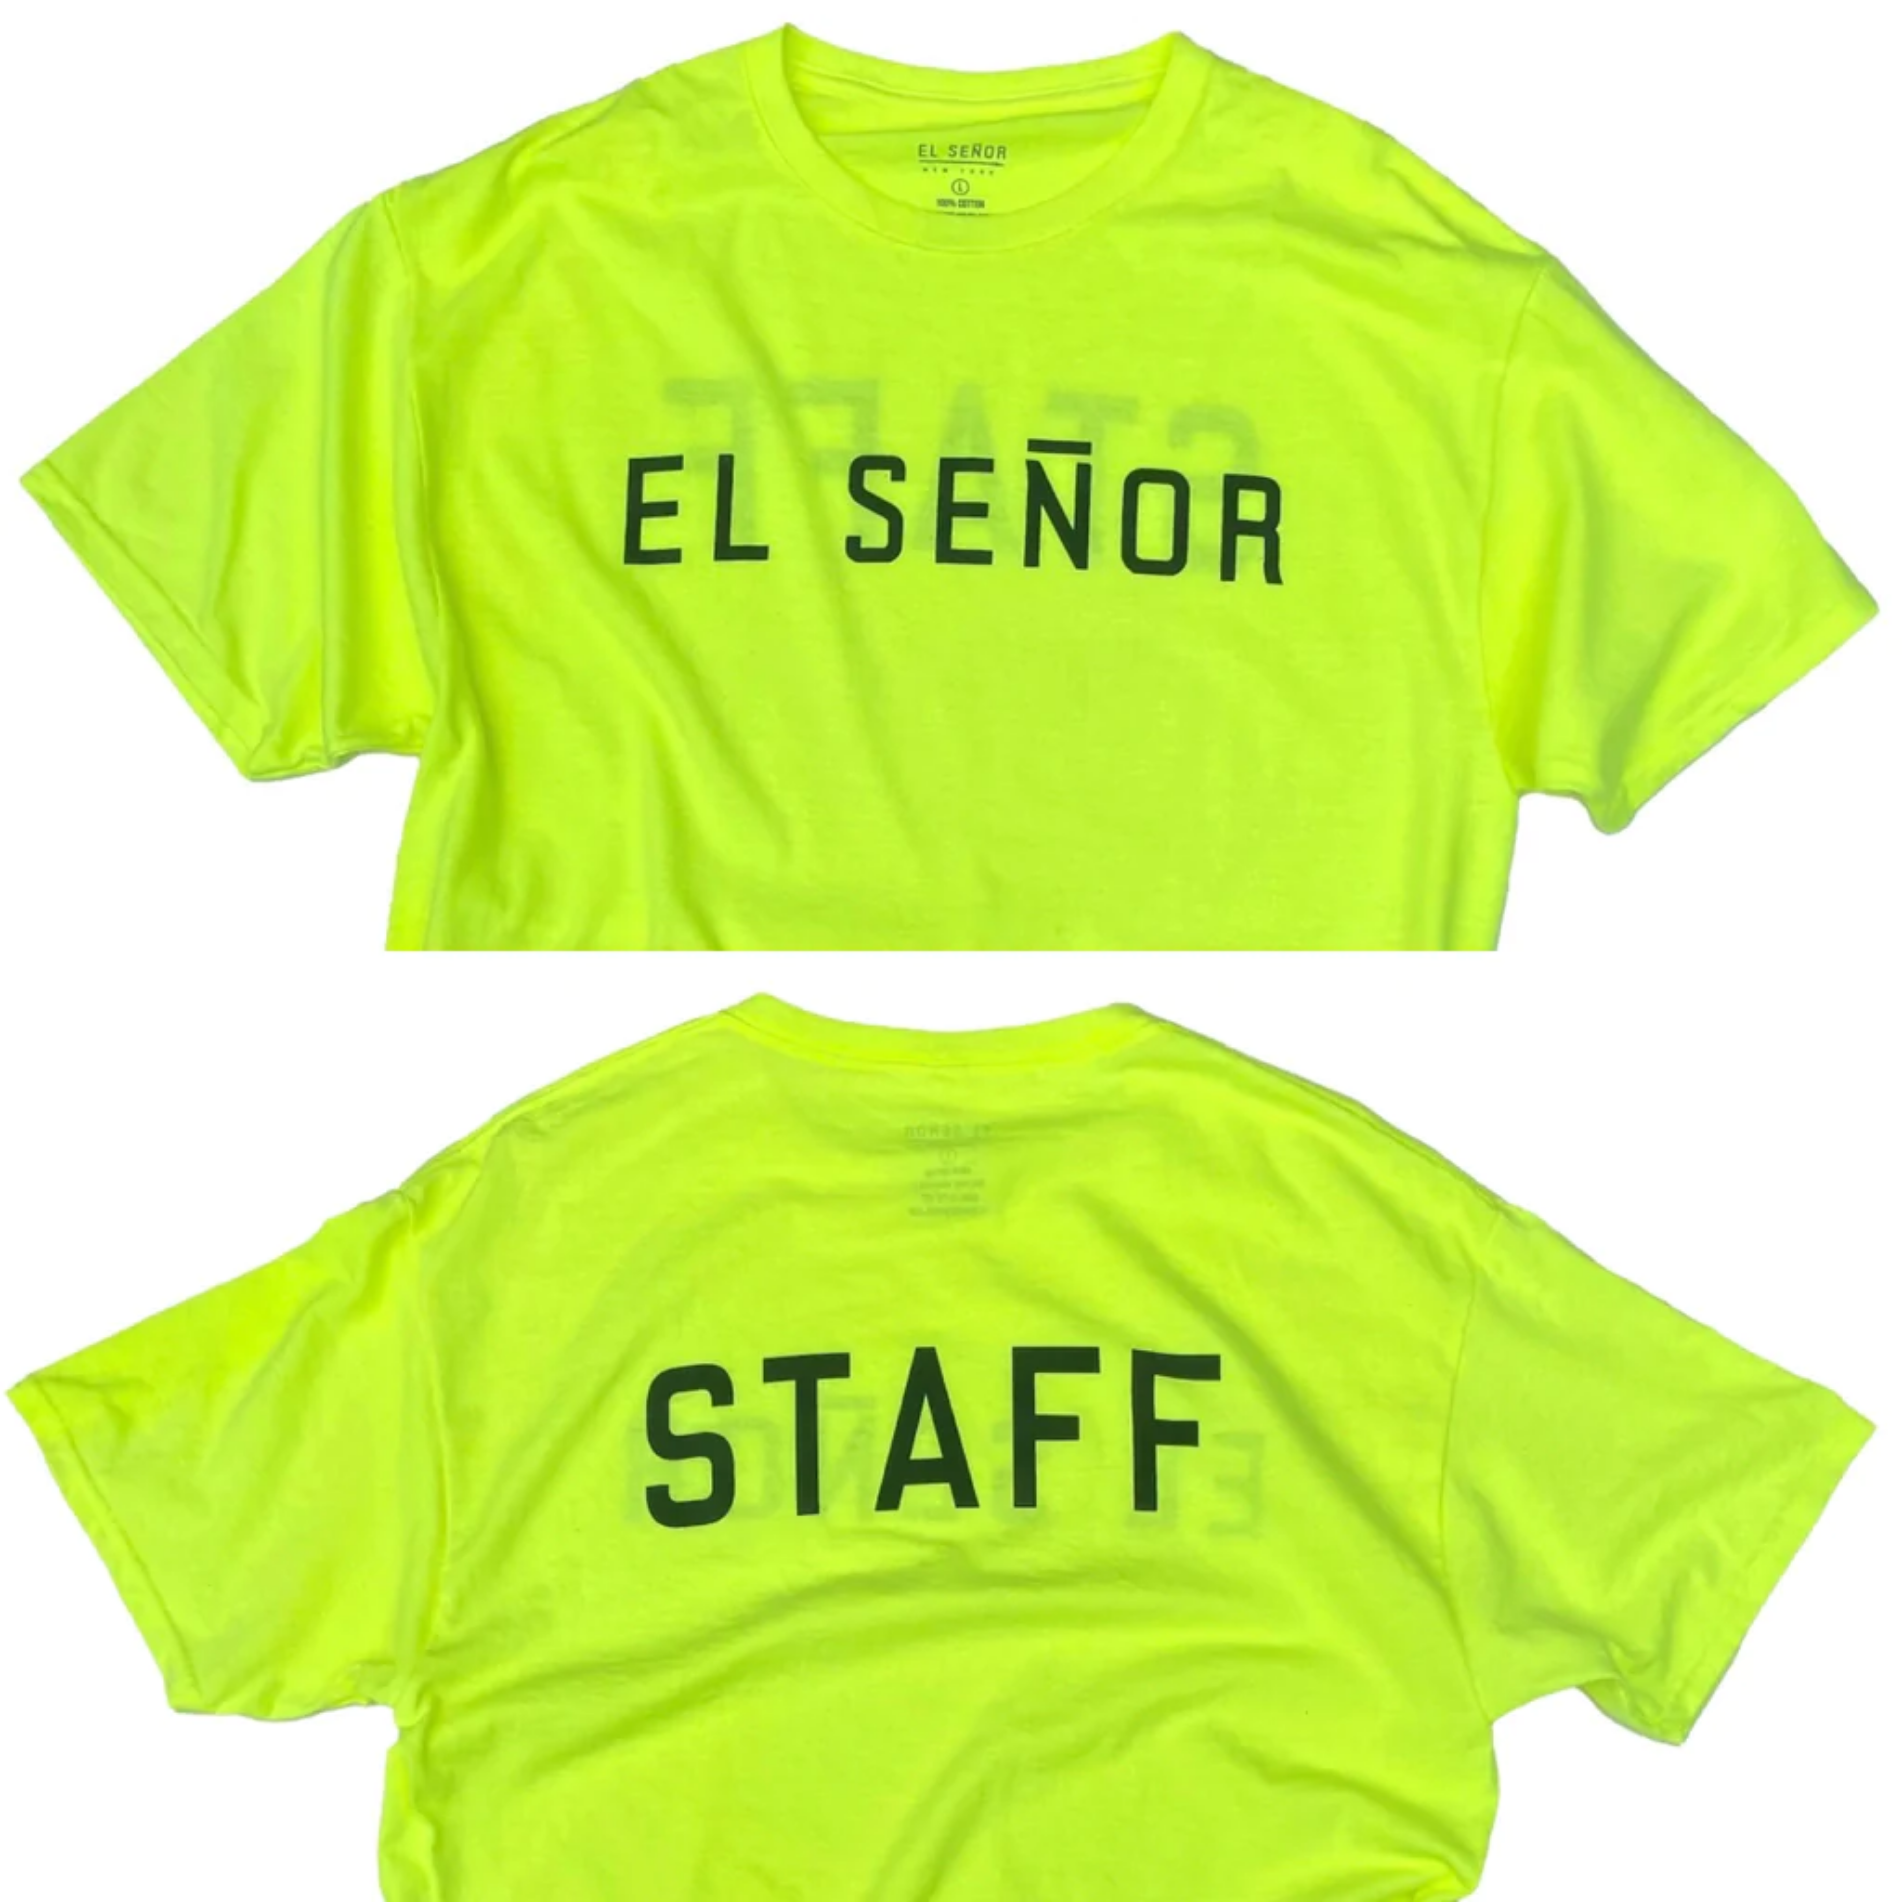 El Senor Staff Tee Hi Viz Green